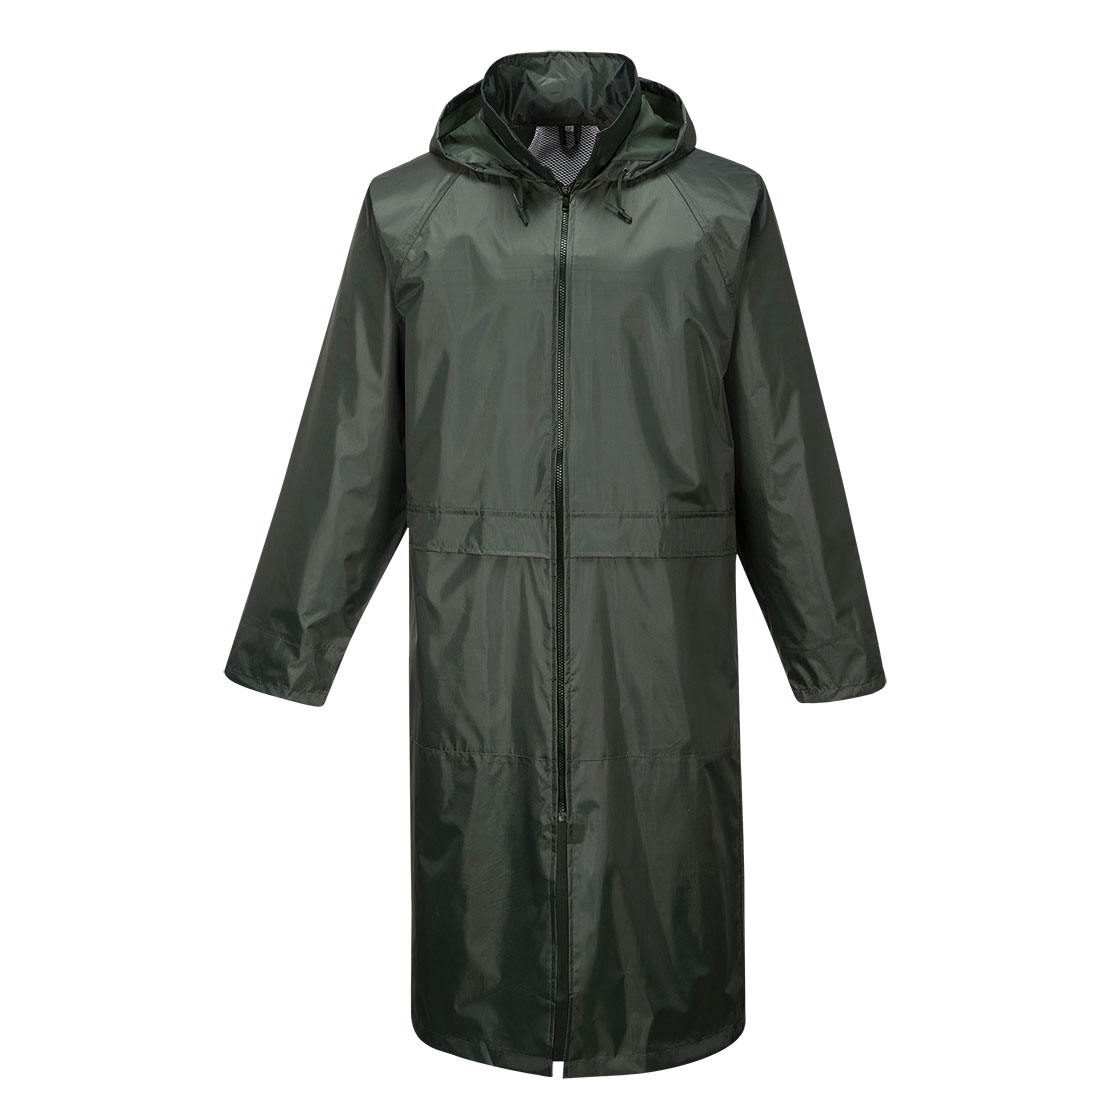 Classic Rain Coat Size XL Olive Green